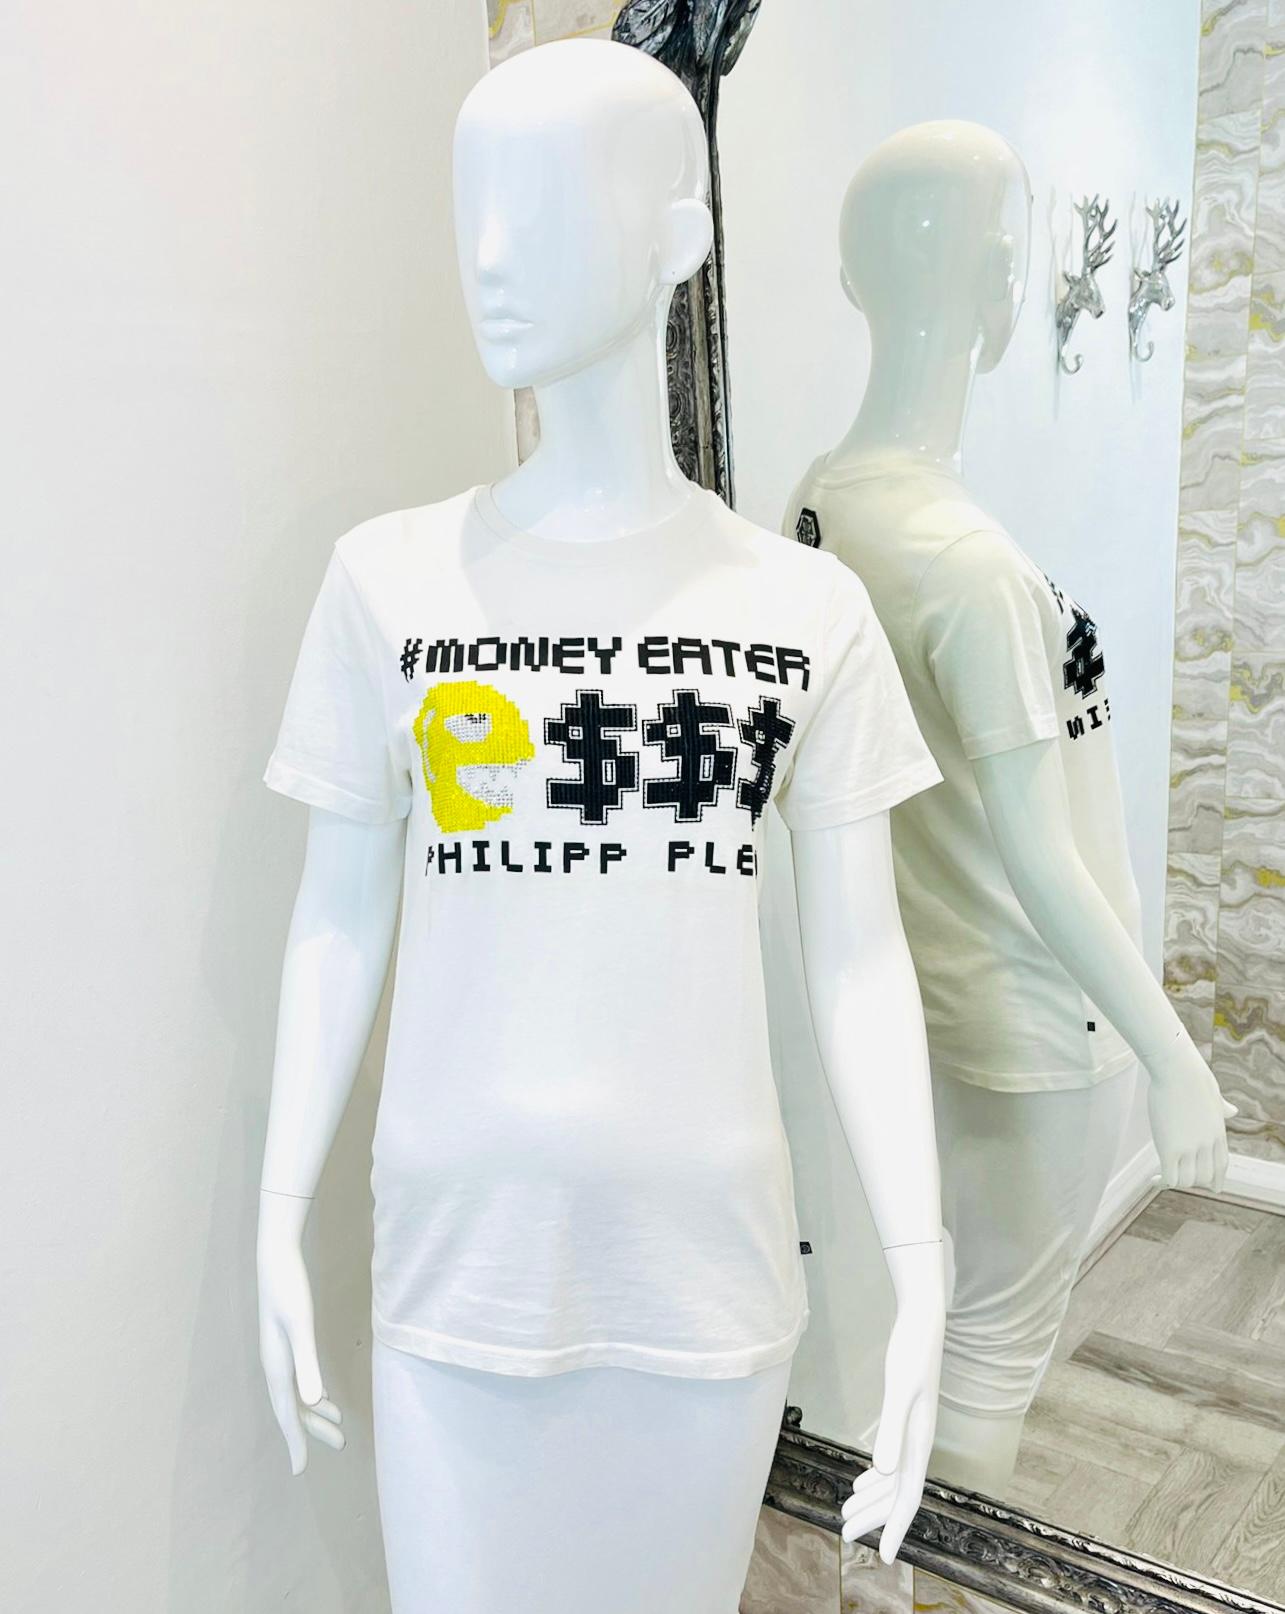 Philipp Plein - T-shirt en coton avec logo en cristal

T-shirt blanc avec logo 